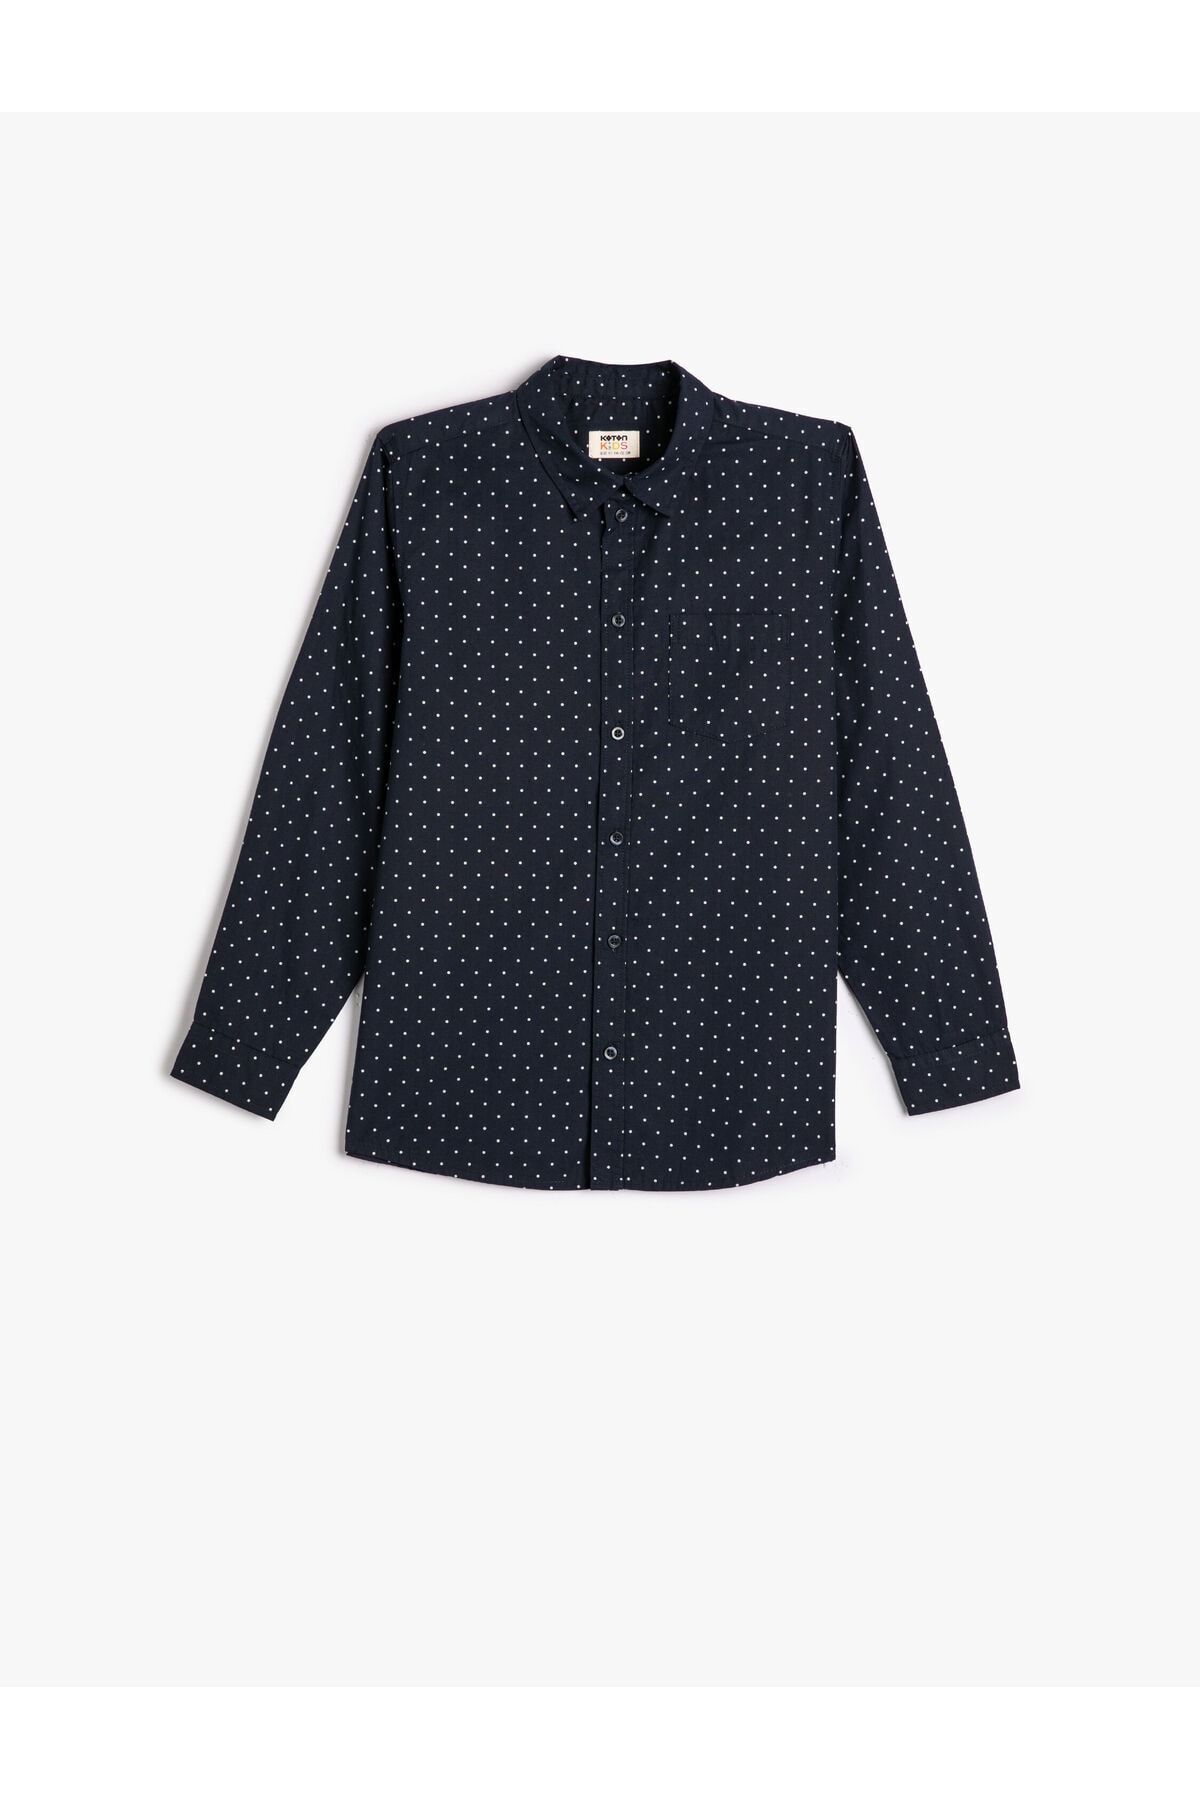 Koton Shirt Pocket Detailed Long Sleeve Cotton Classic Collar